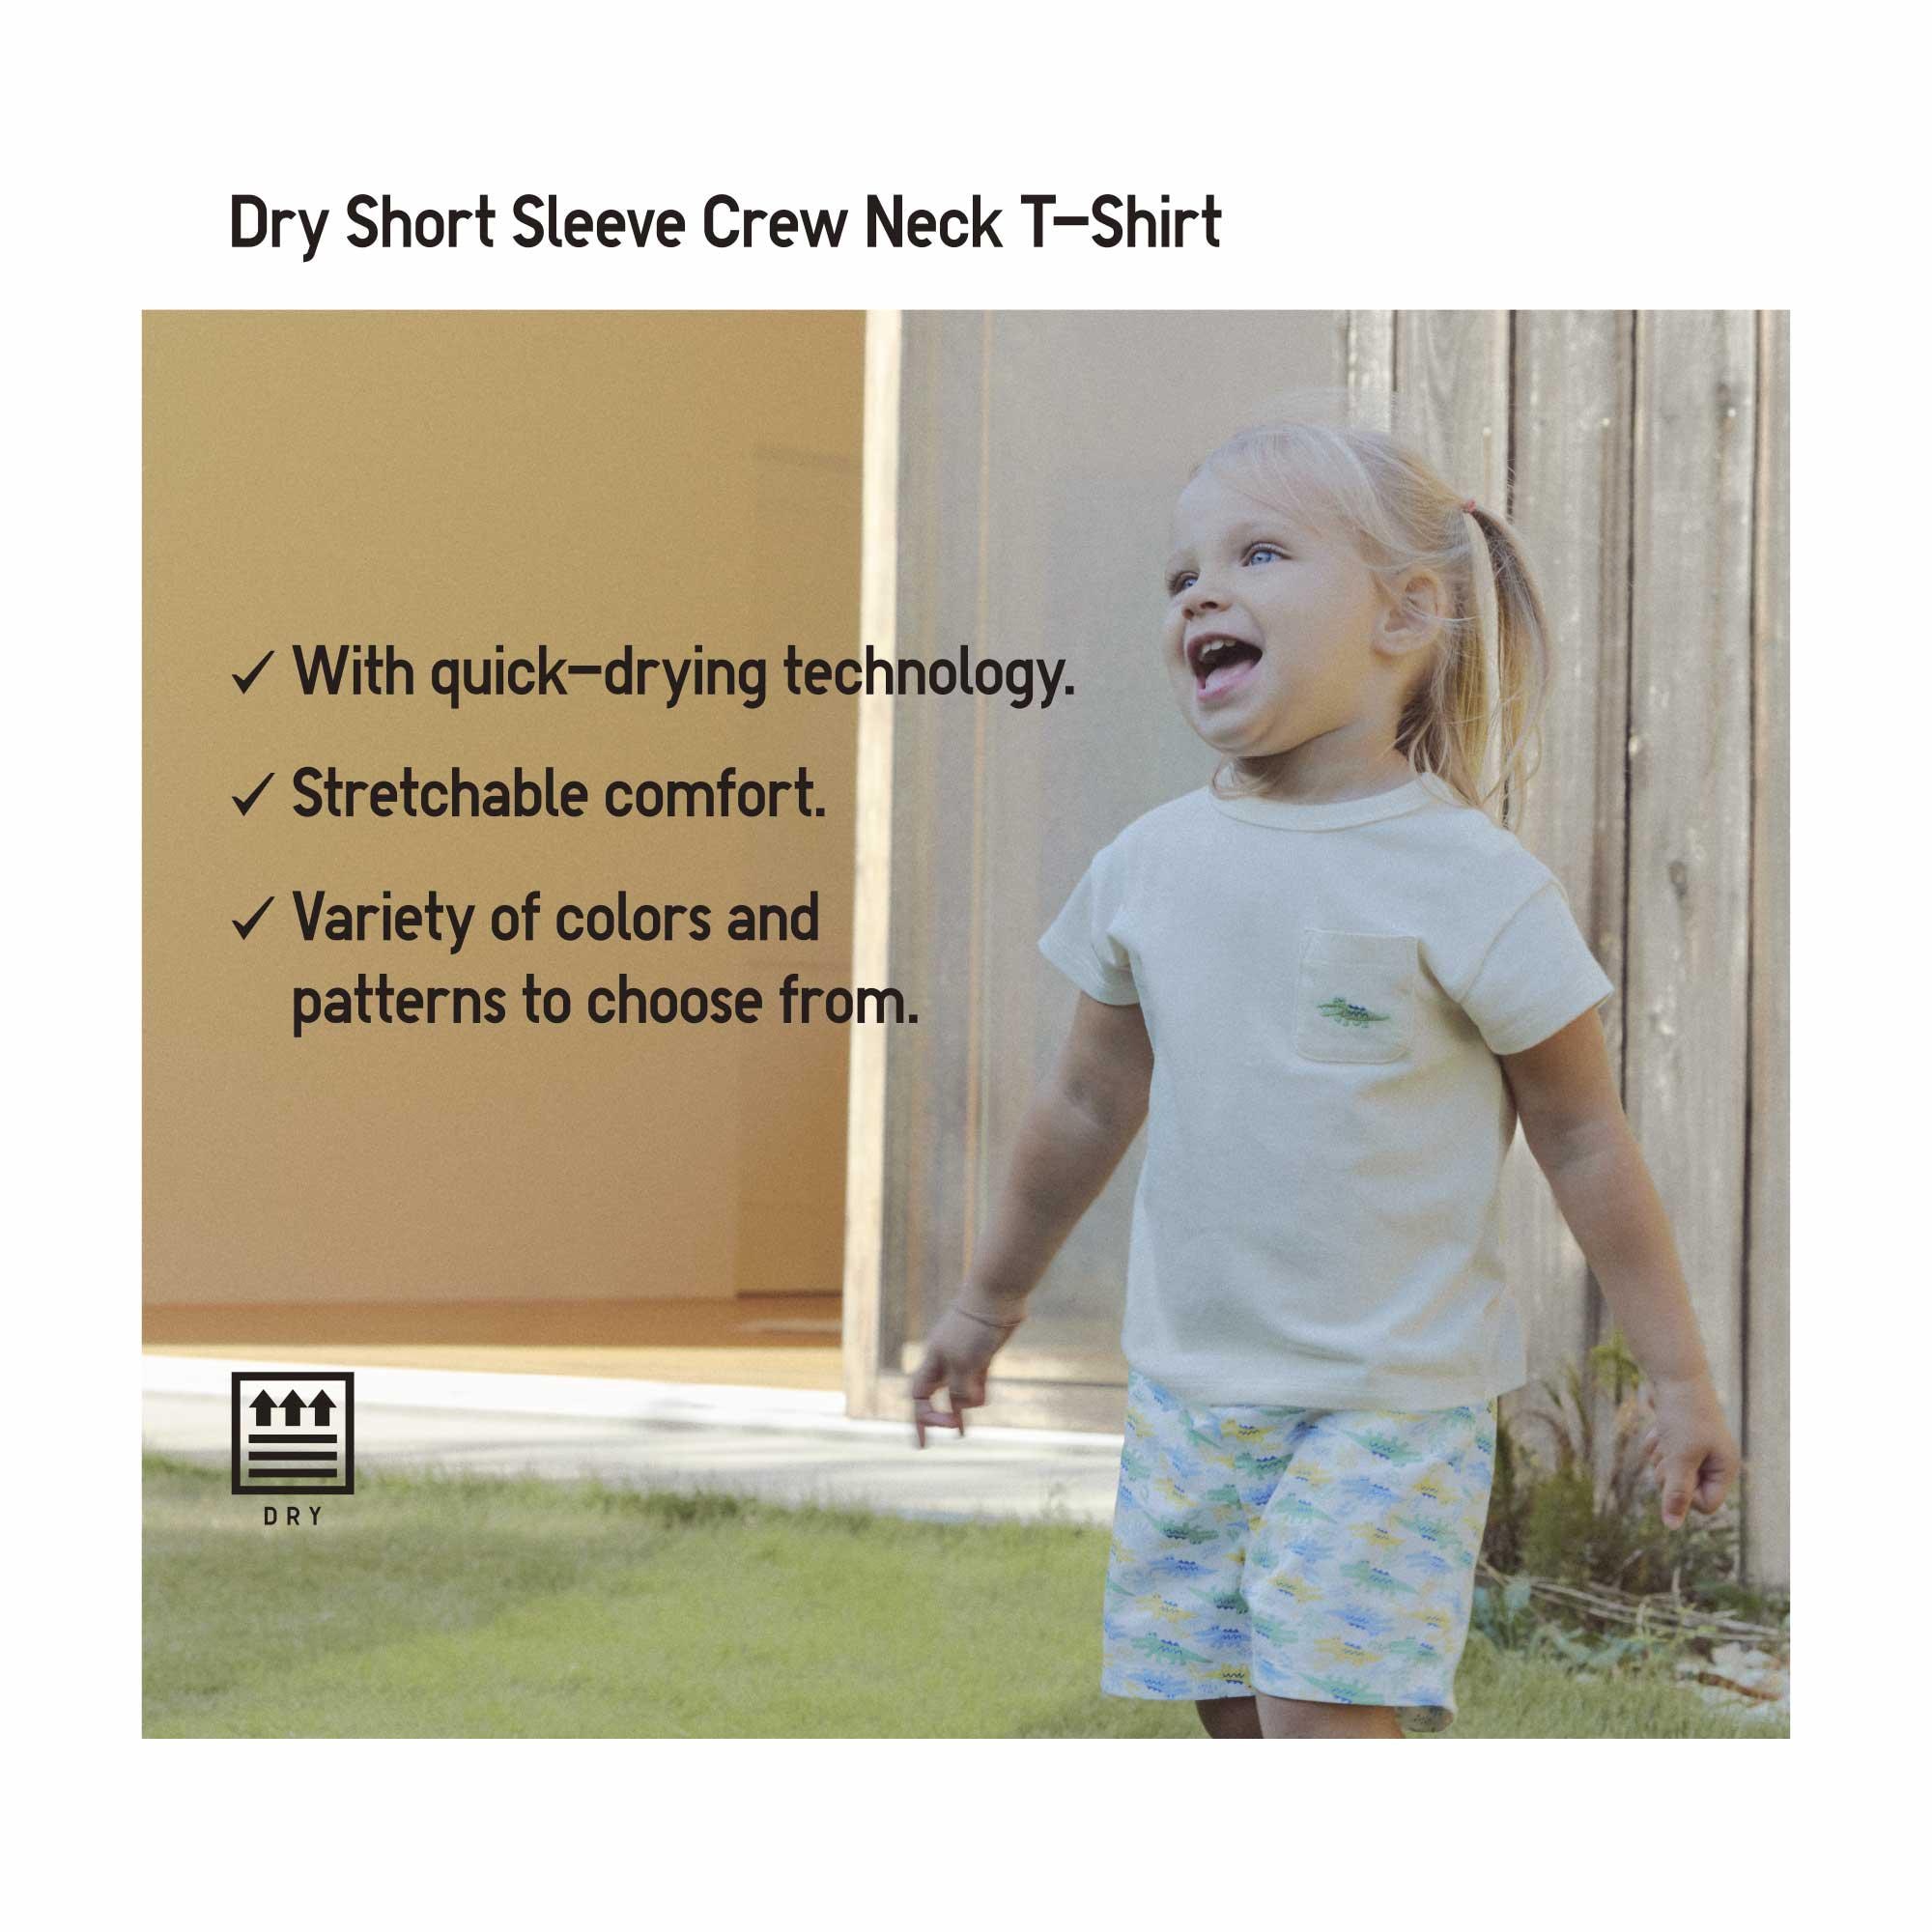 DRY CREW NECK SHORT SLEEVE T-SHIRT